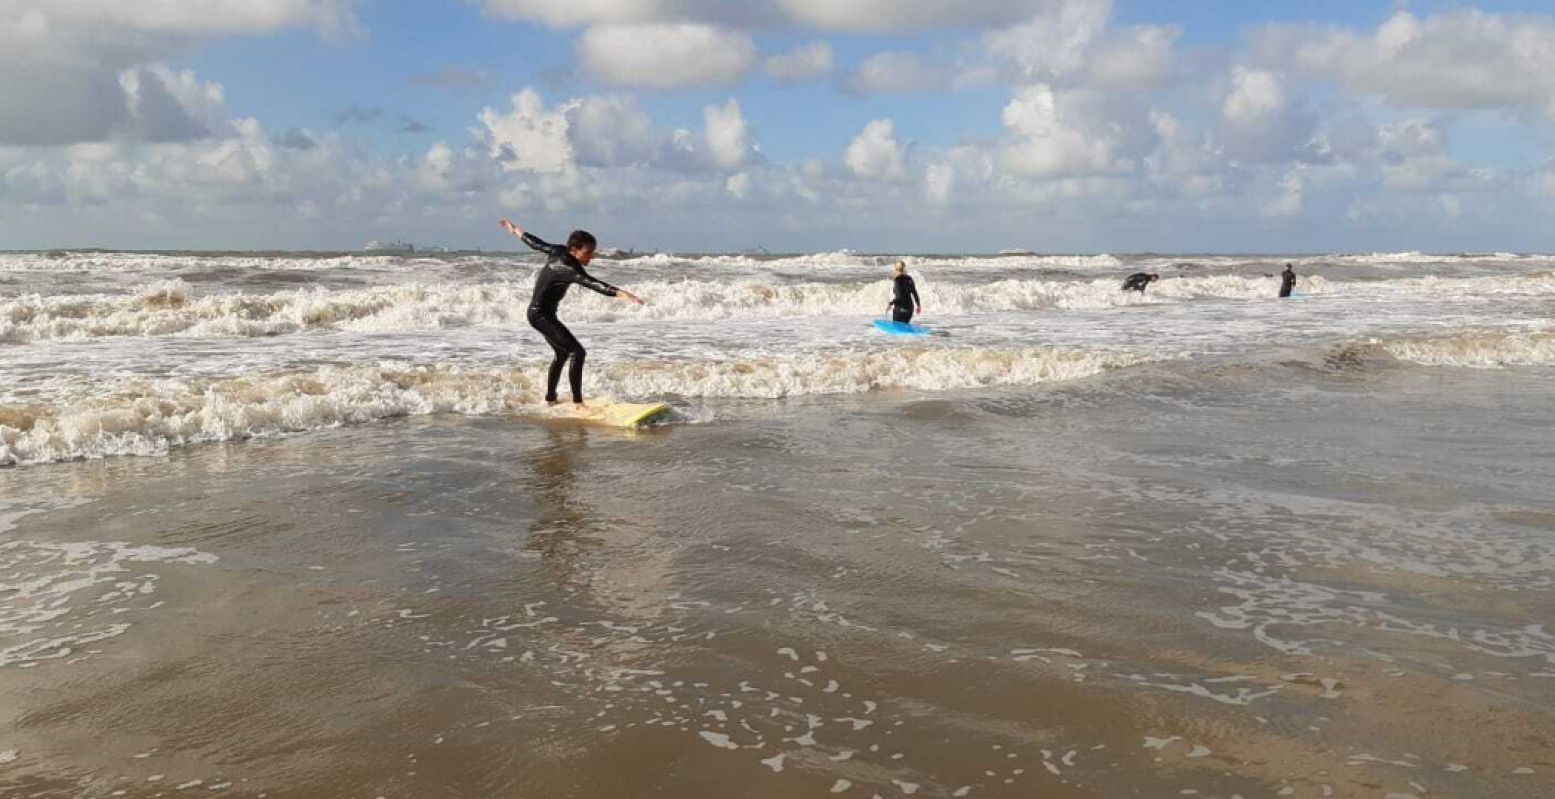 Bedwing de golven en begin met een surfles. Foto: DagjeWeg.NL / Ernst Plattèl